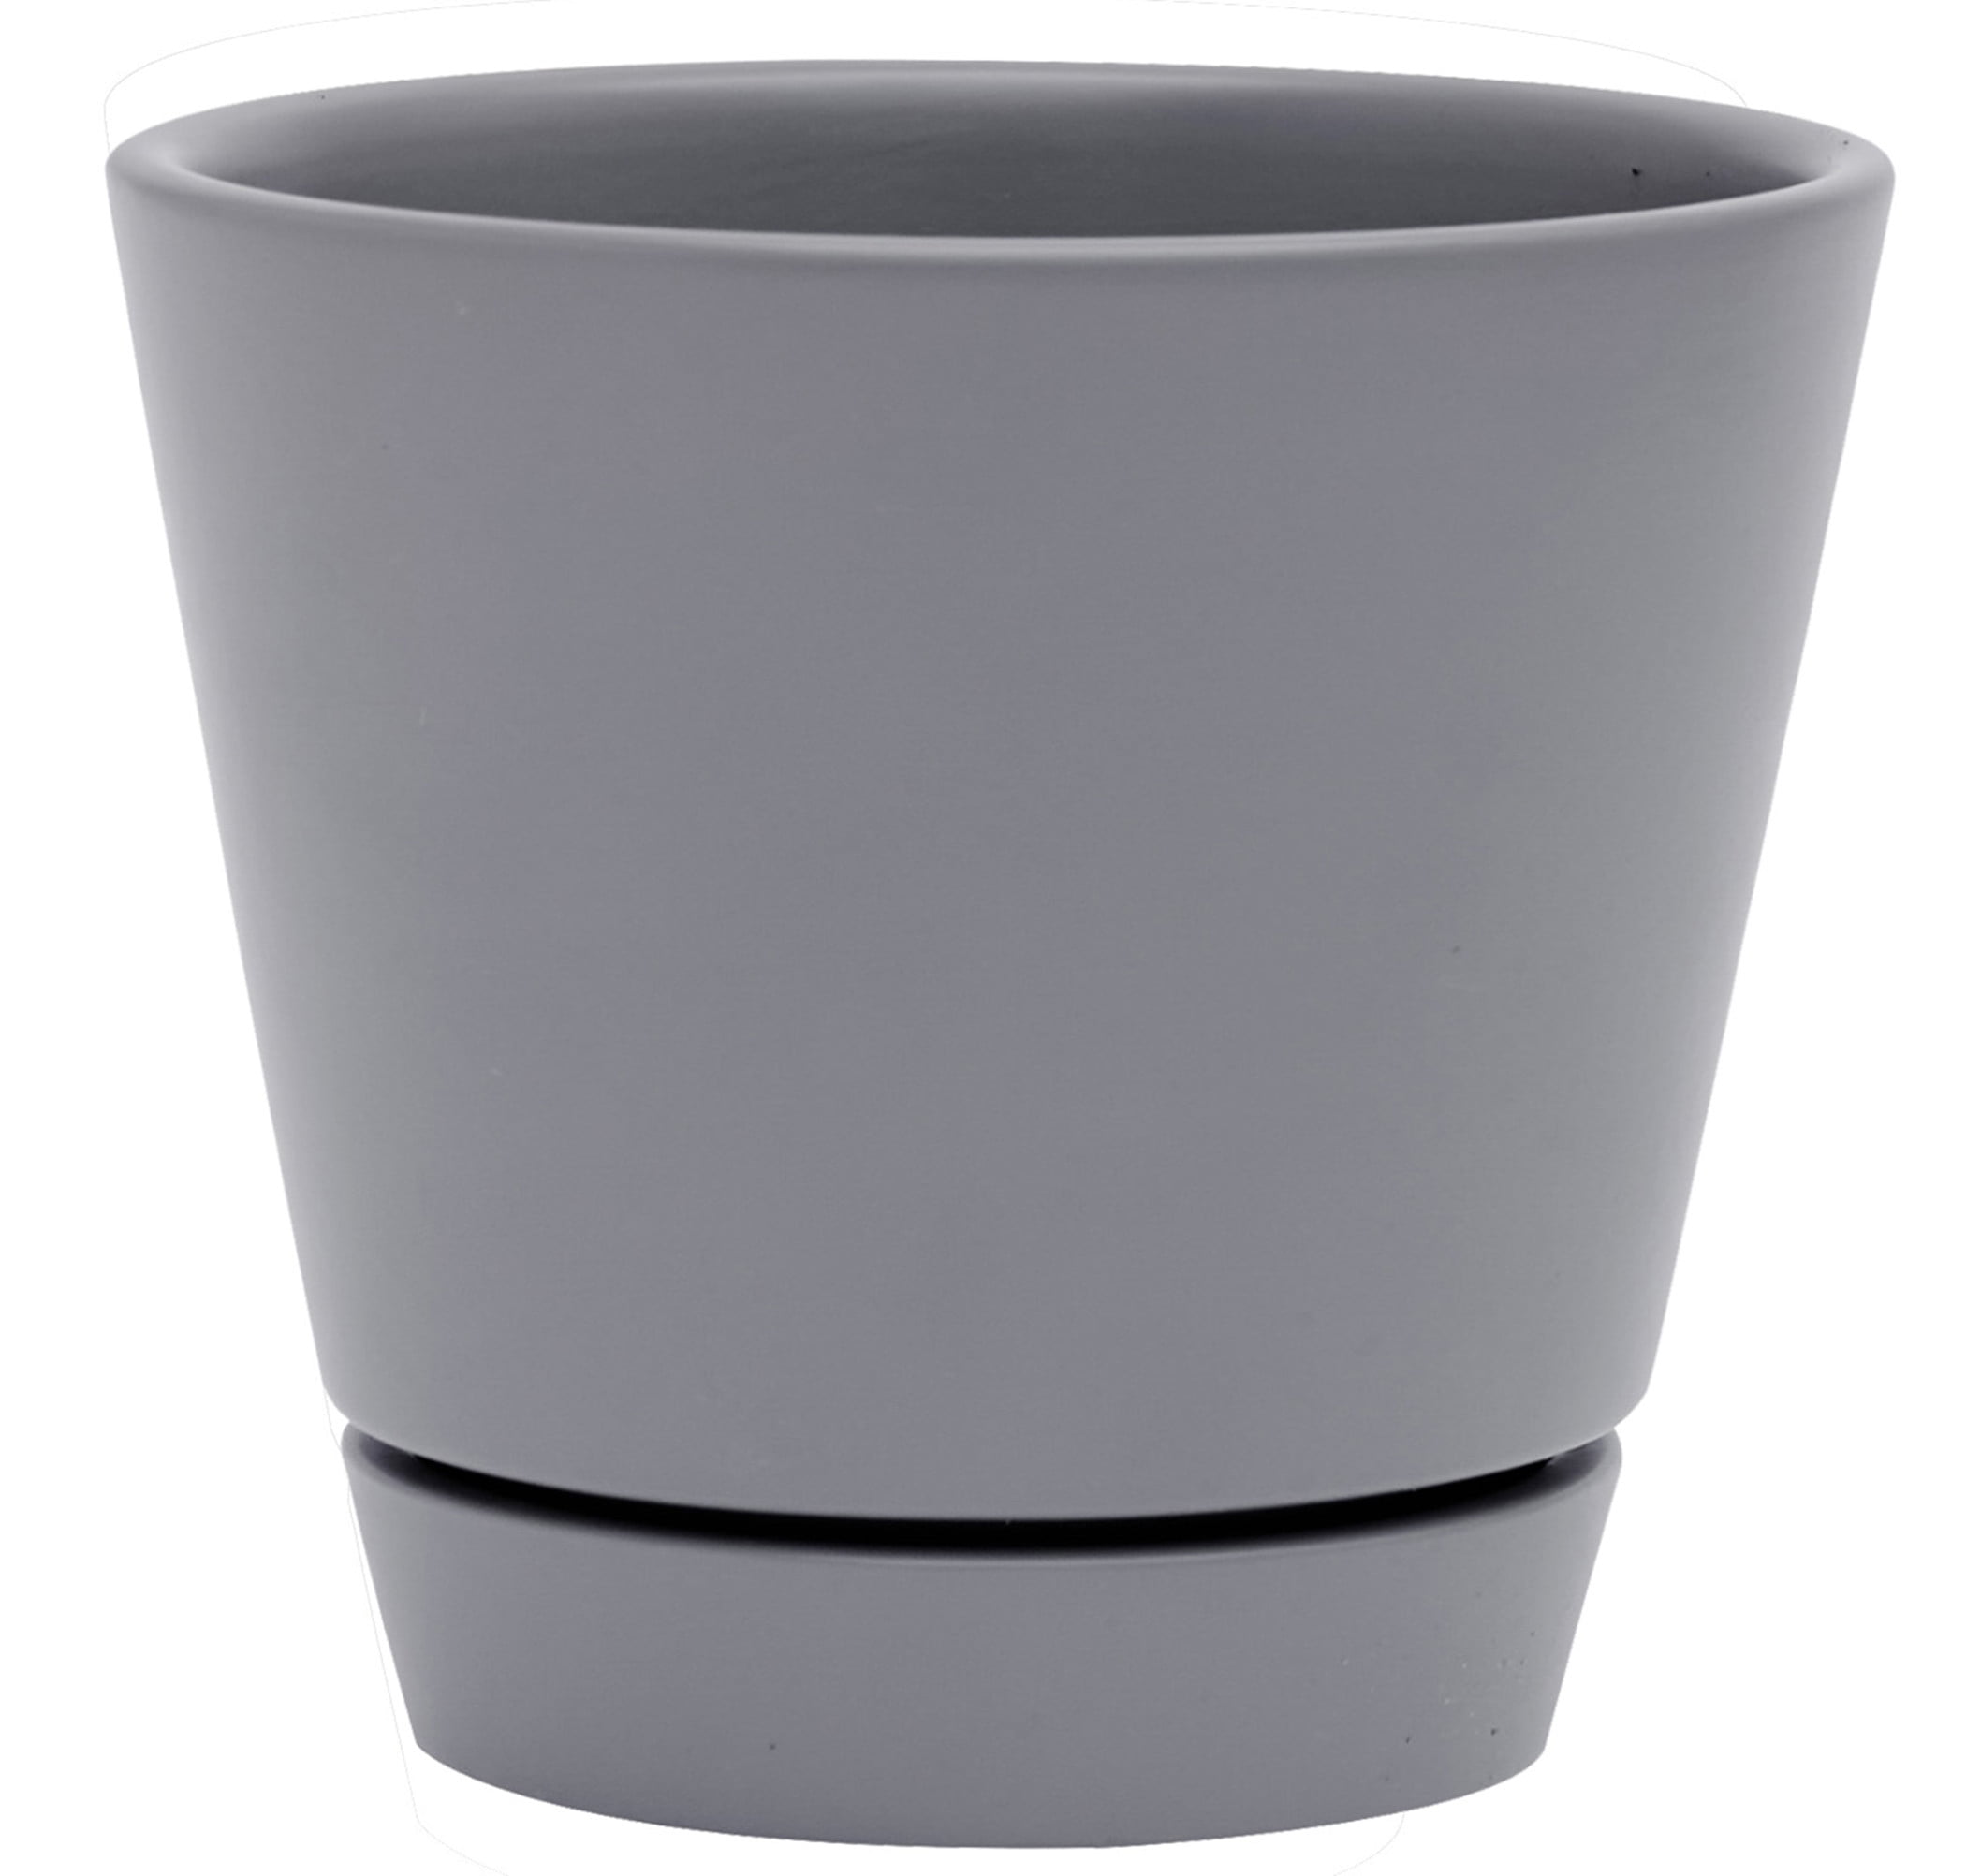 Mainstays 8" x 8" x 7" Round Gray Ceramic Plant Planter with Saucer